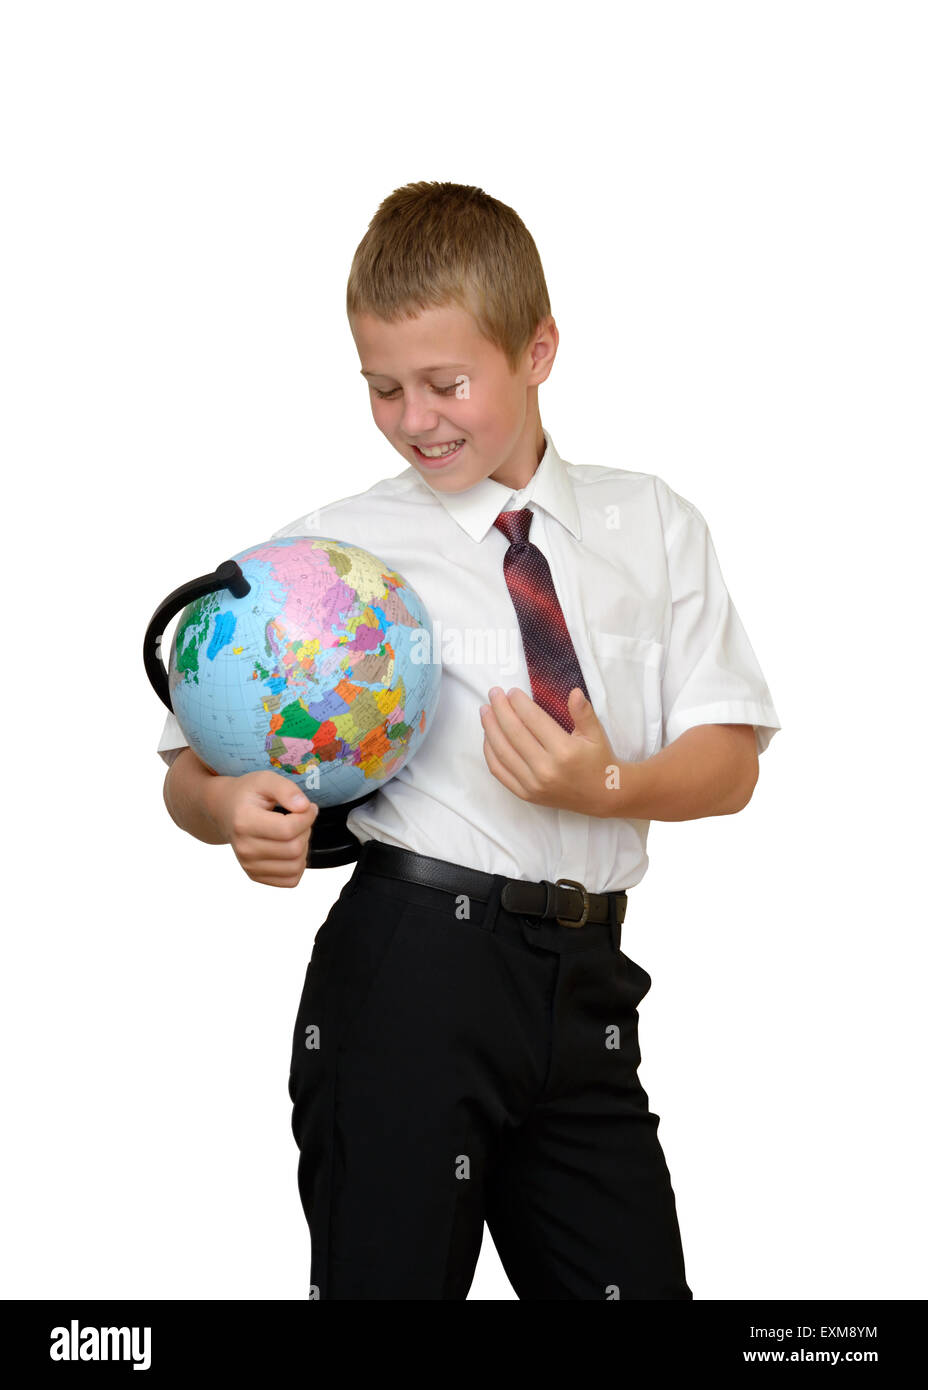 schoolboy with globe Stock Photo